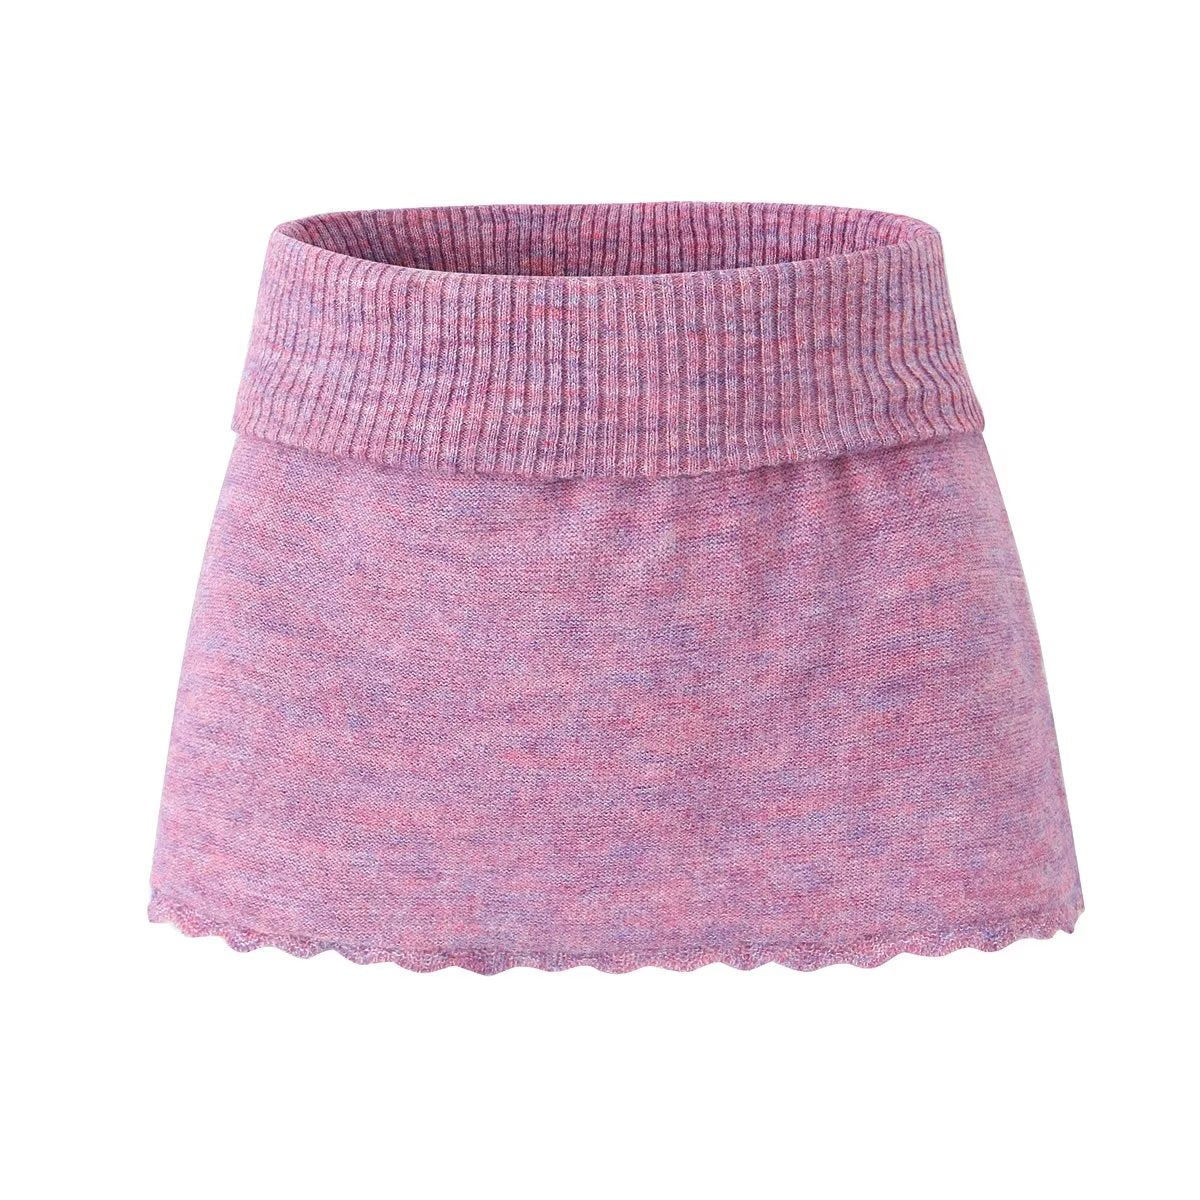 2 Piece Set: Blended Knitted Vest Top Wide Waist Skirt Set